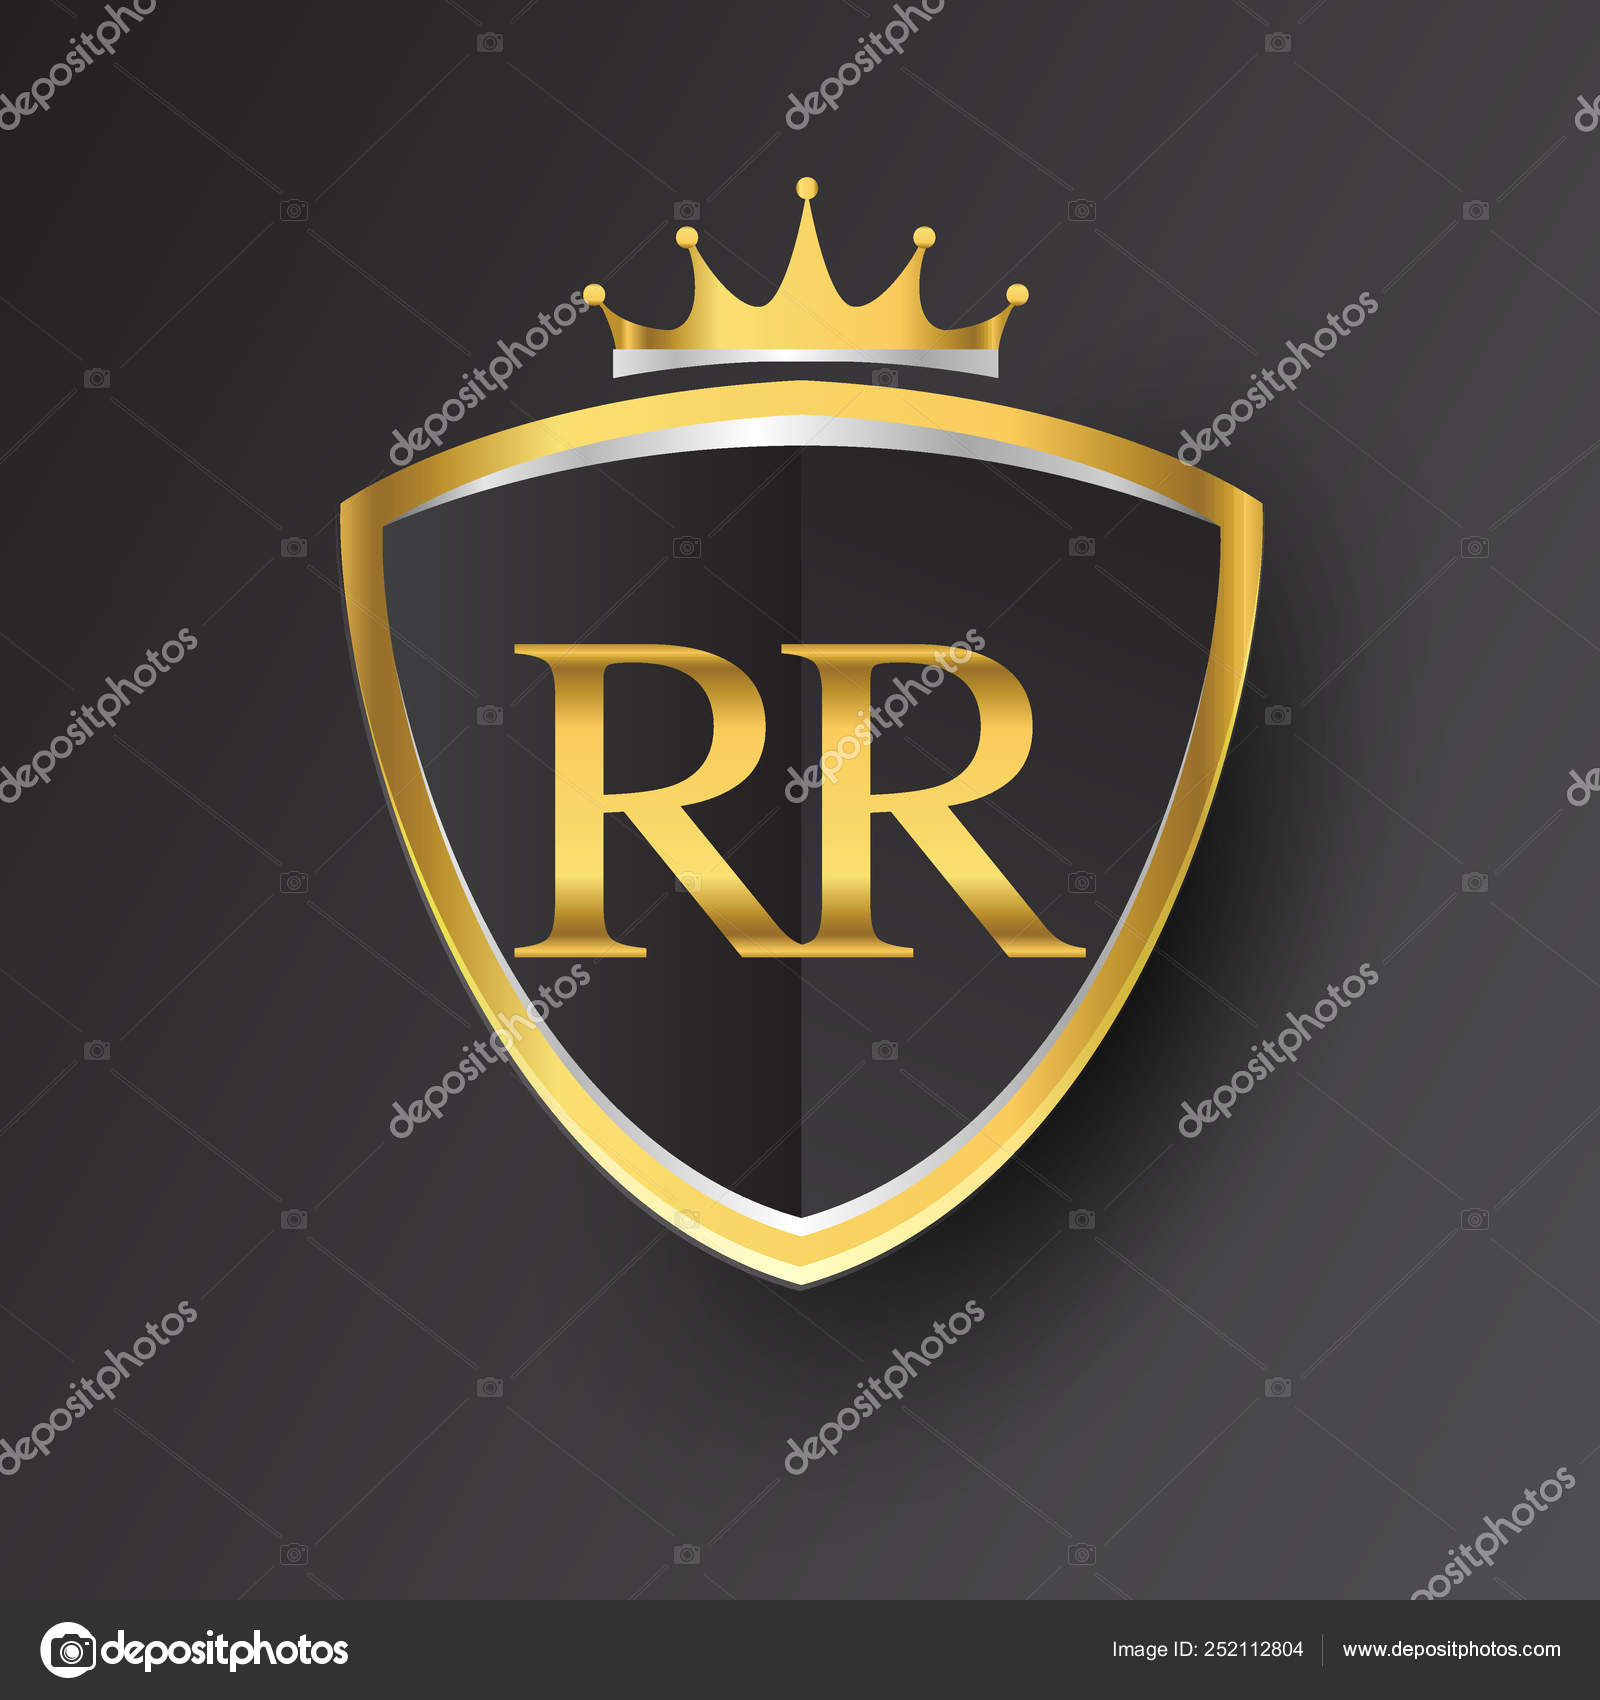 1 410 Rr Logo Vectors Royalty Free Vector Rr Logo Images Depositphotos